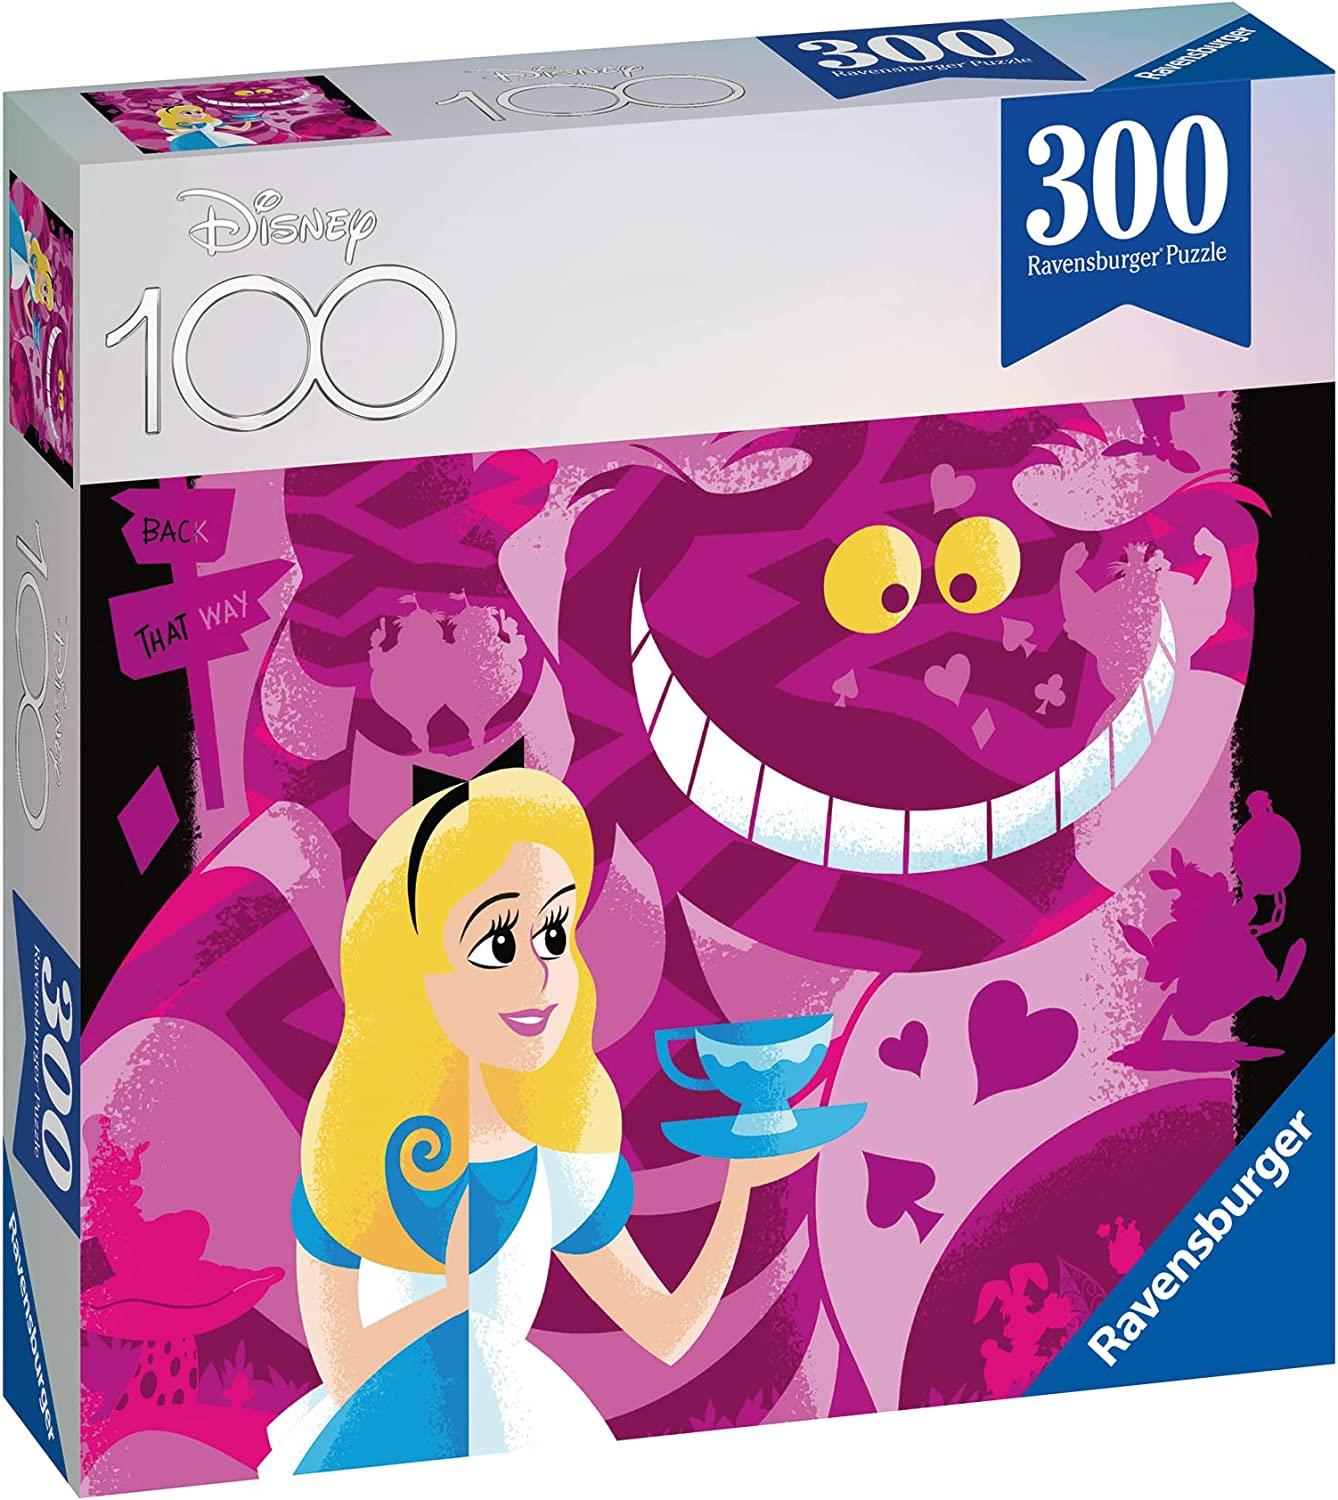 Ravensburger Disney 100th Anniversary Alice in Wonderland Jigsaw Puzzle (300 Pieces)